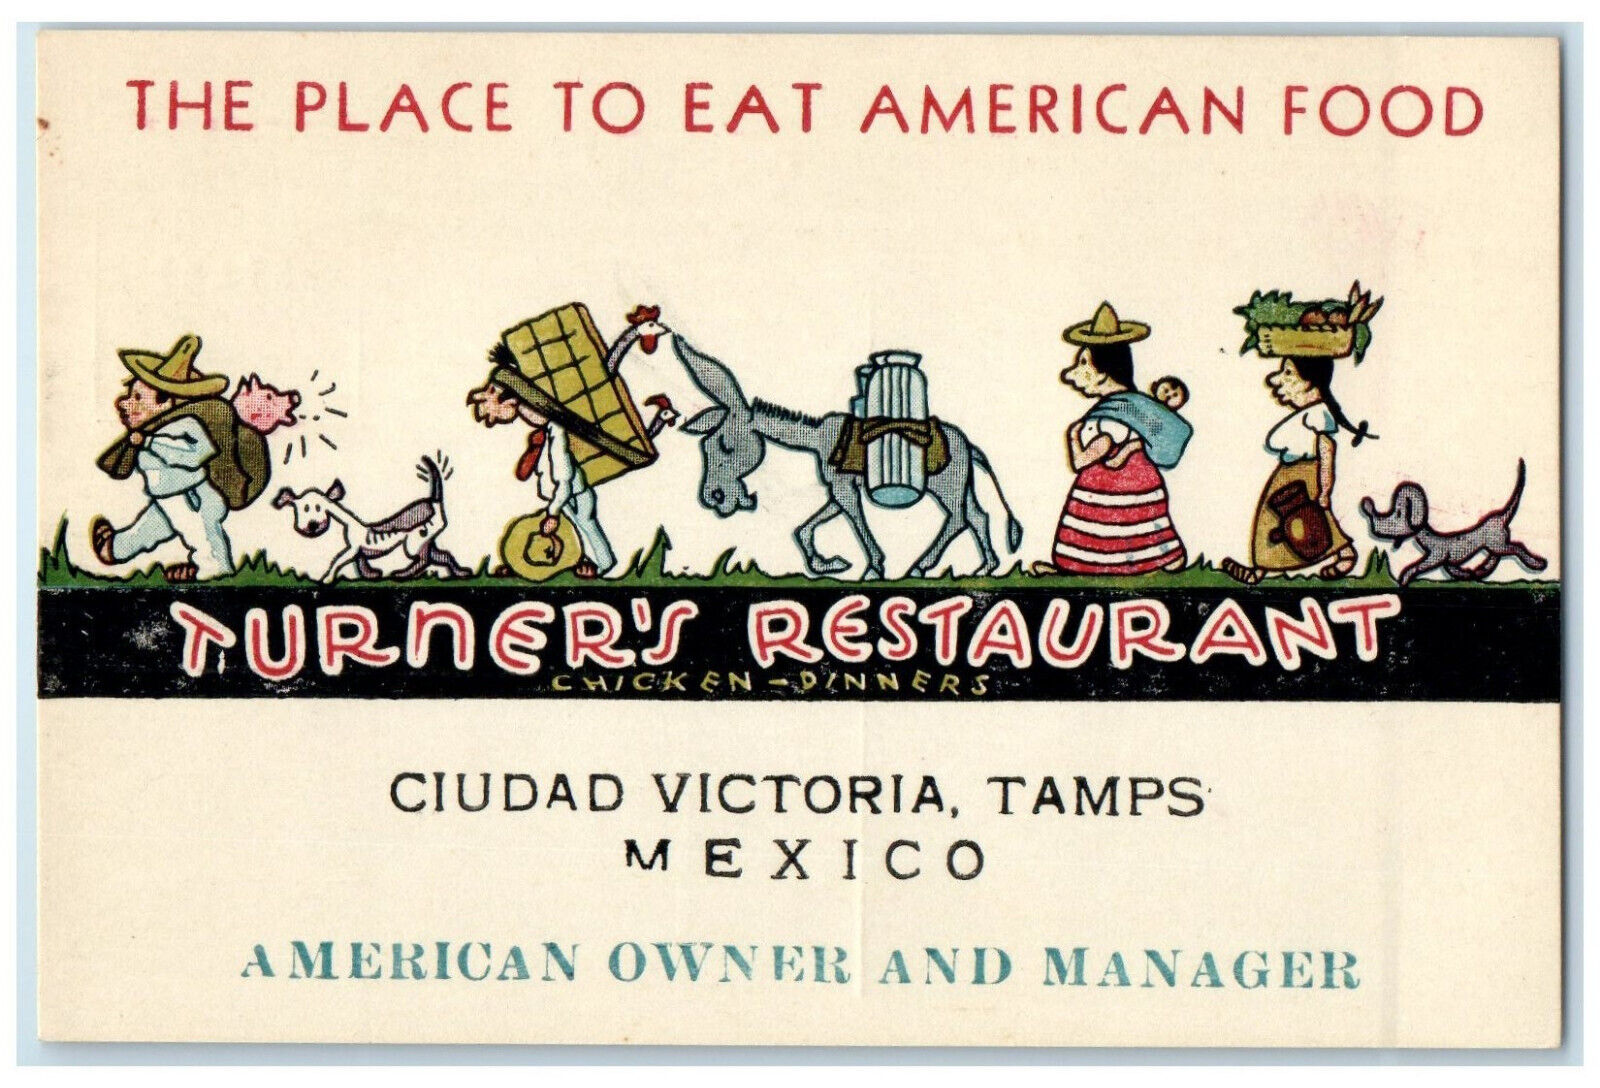 c1950's Turner's Restaurant Chicken-Dinners Ciudad Victoria Mexico Postcard